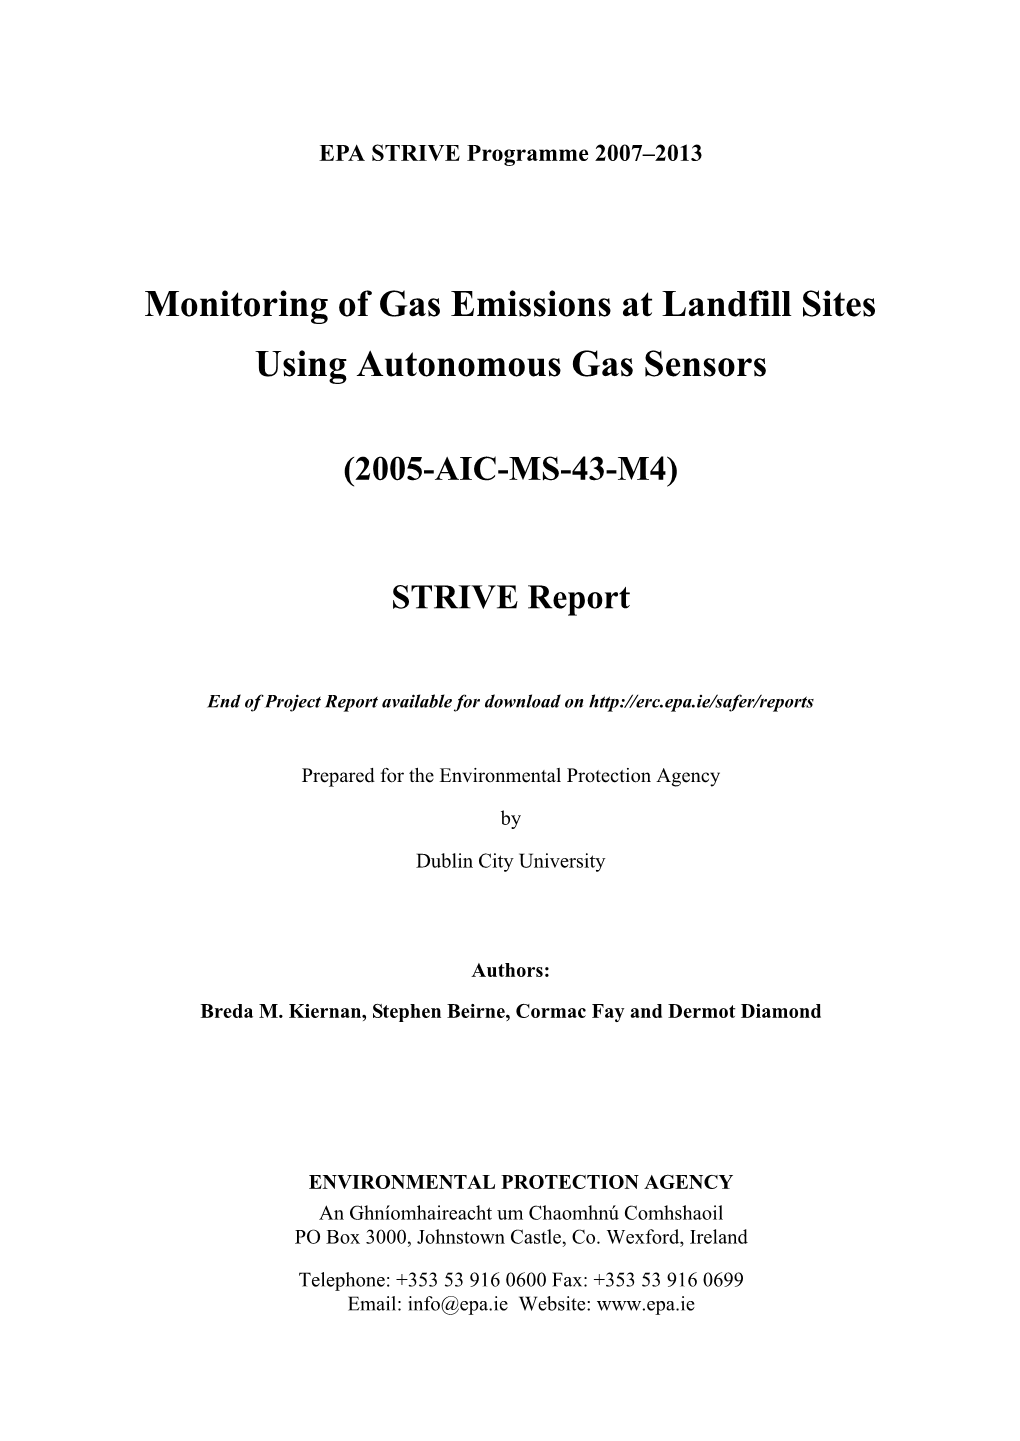 Monitoring of Gas Emissions at Landfill Sites Using Autonomous Gas Sensors